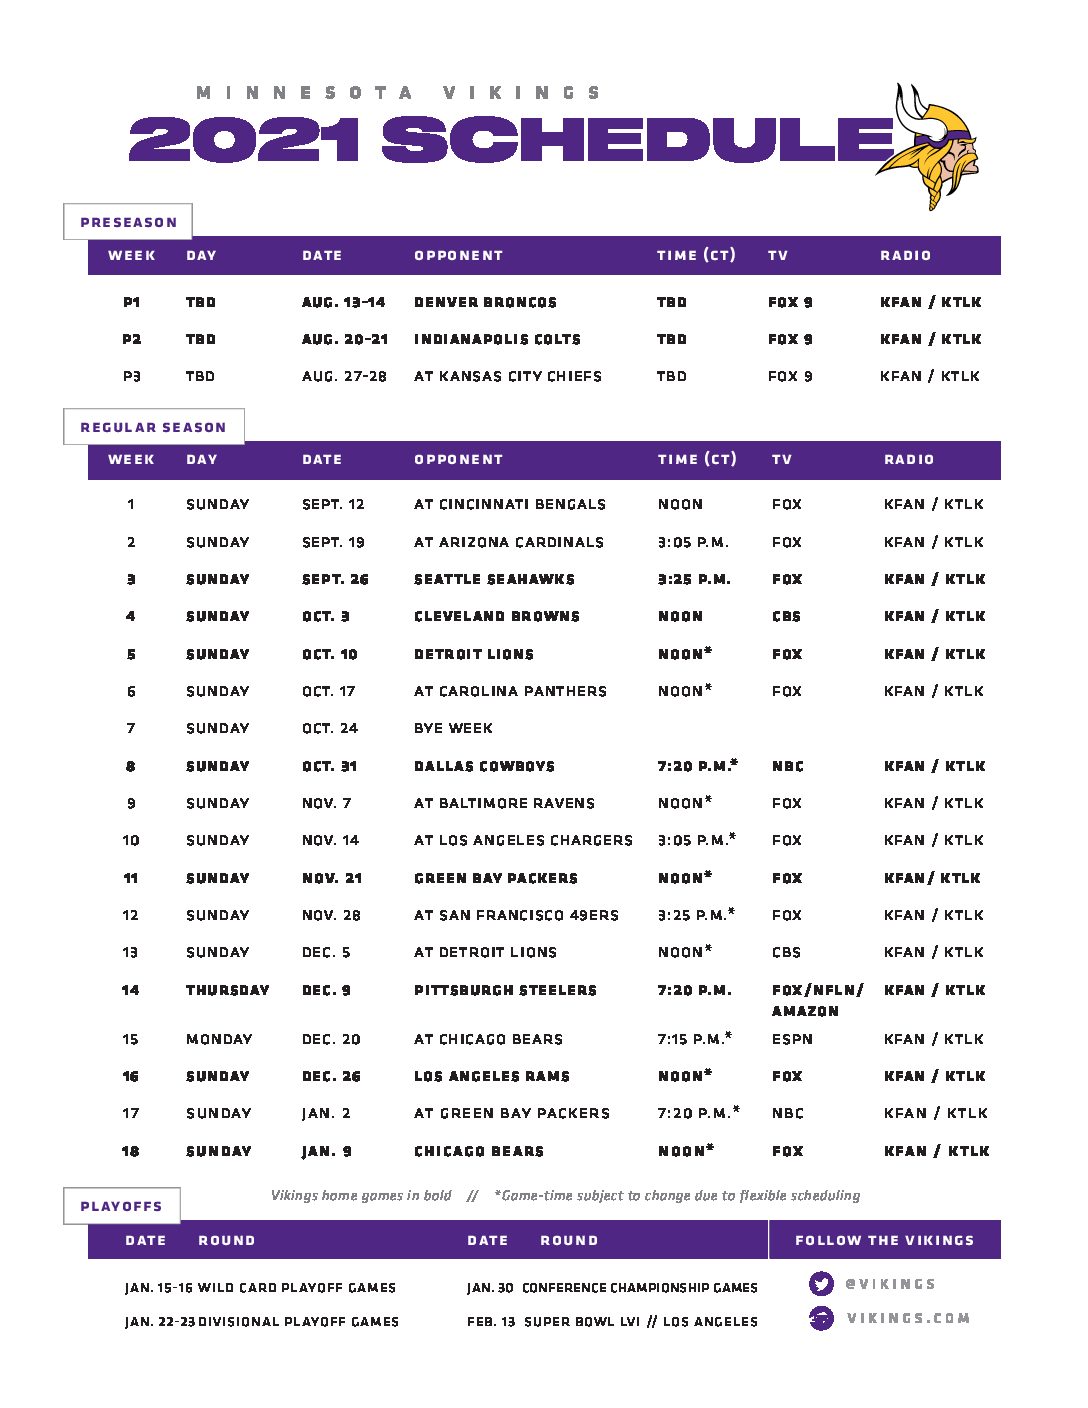 Vikings release 2021 schedule - Minnesota News Network